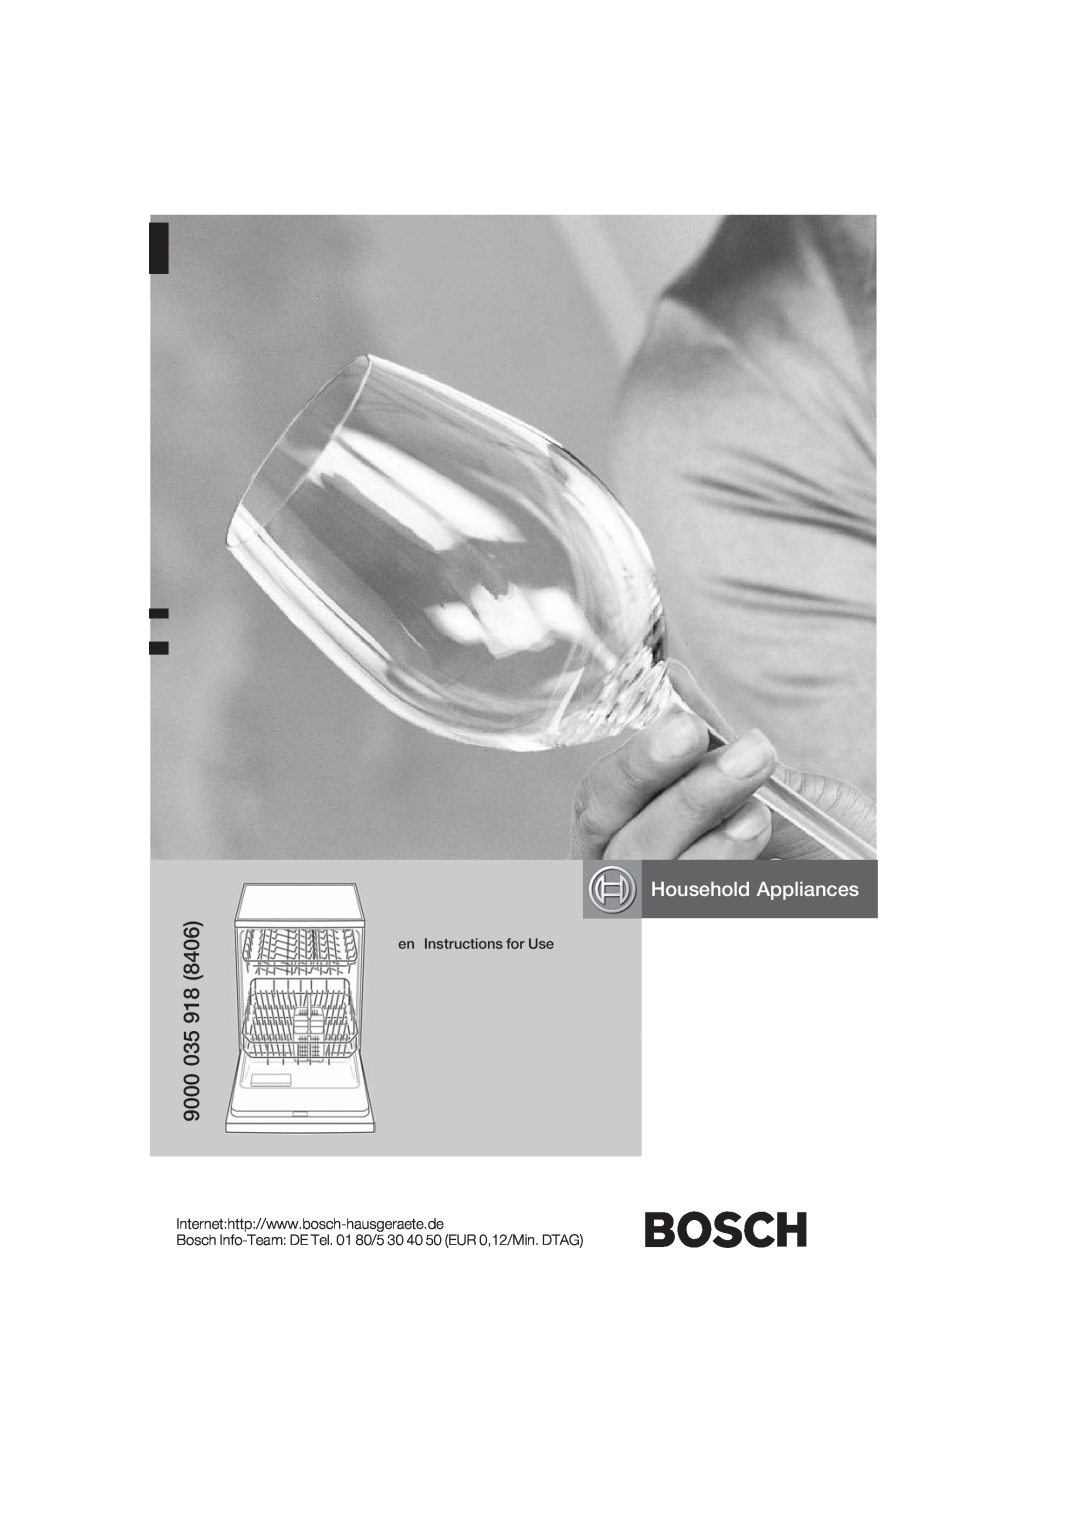 Bosch Appliances 9000 035918 (8406 0) manual $$ &+++% % $%,# 8 3 2!$ 